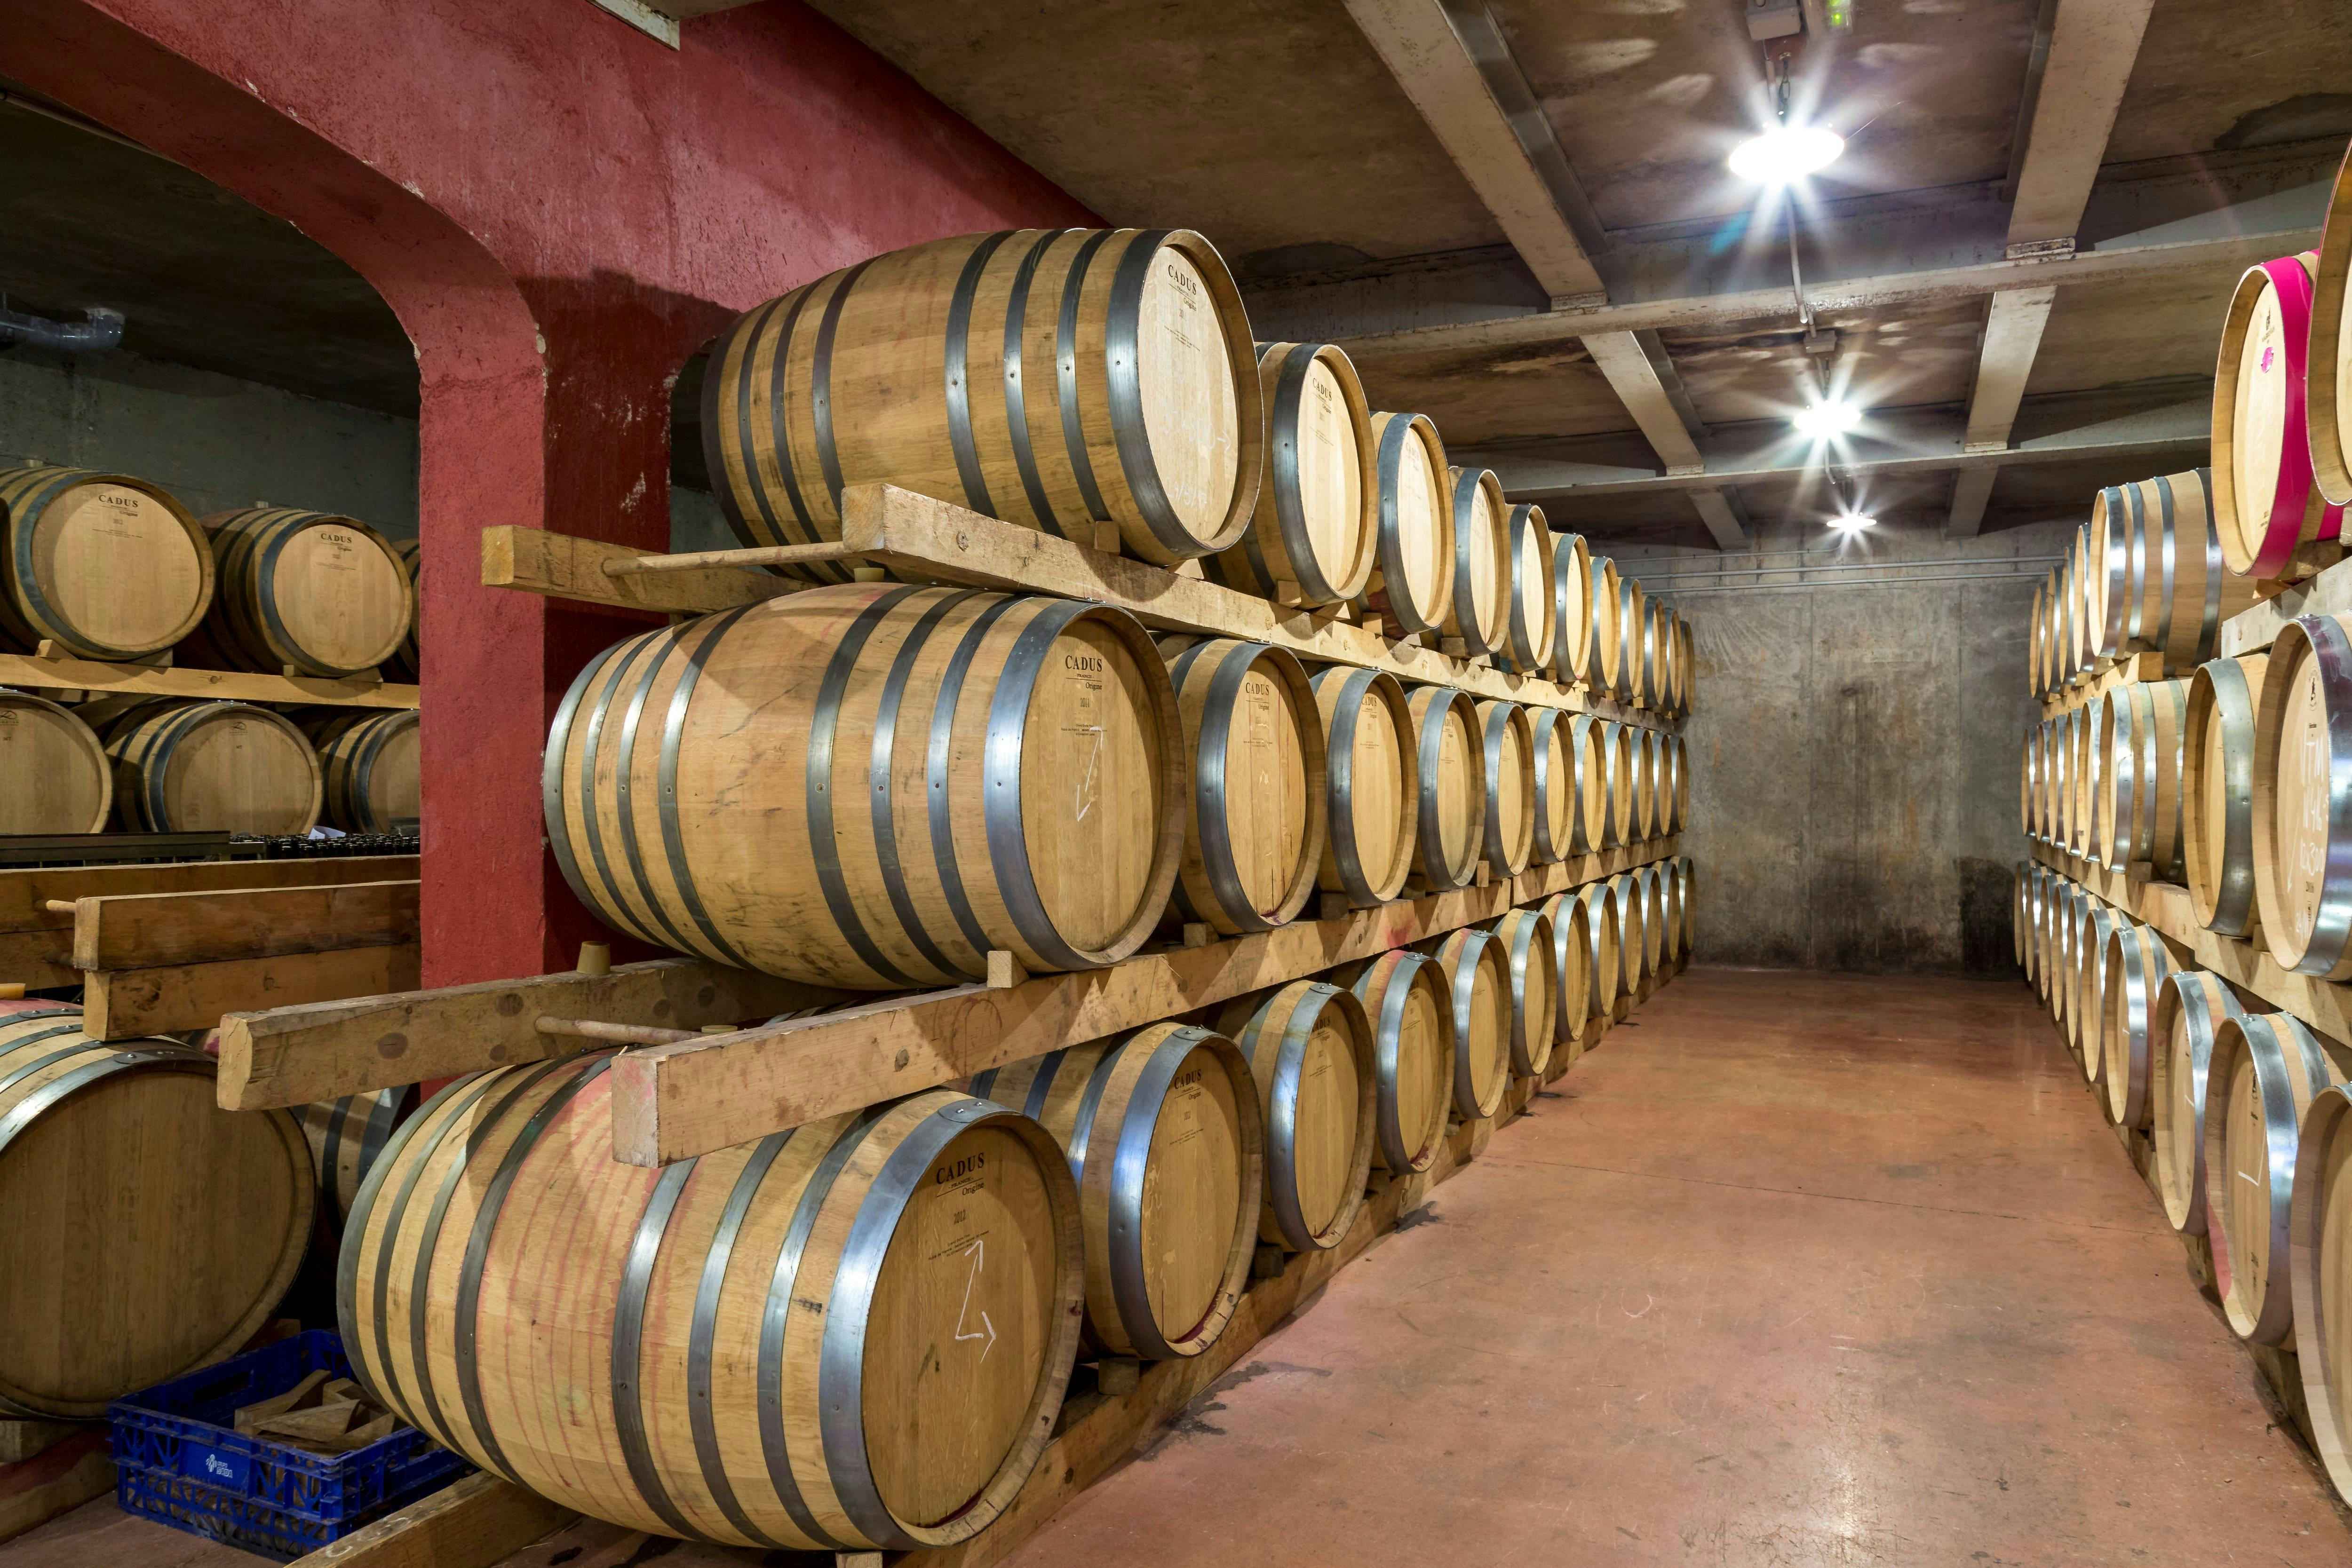 Macià Batle Winery Visit with Tasting